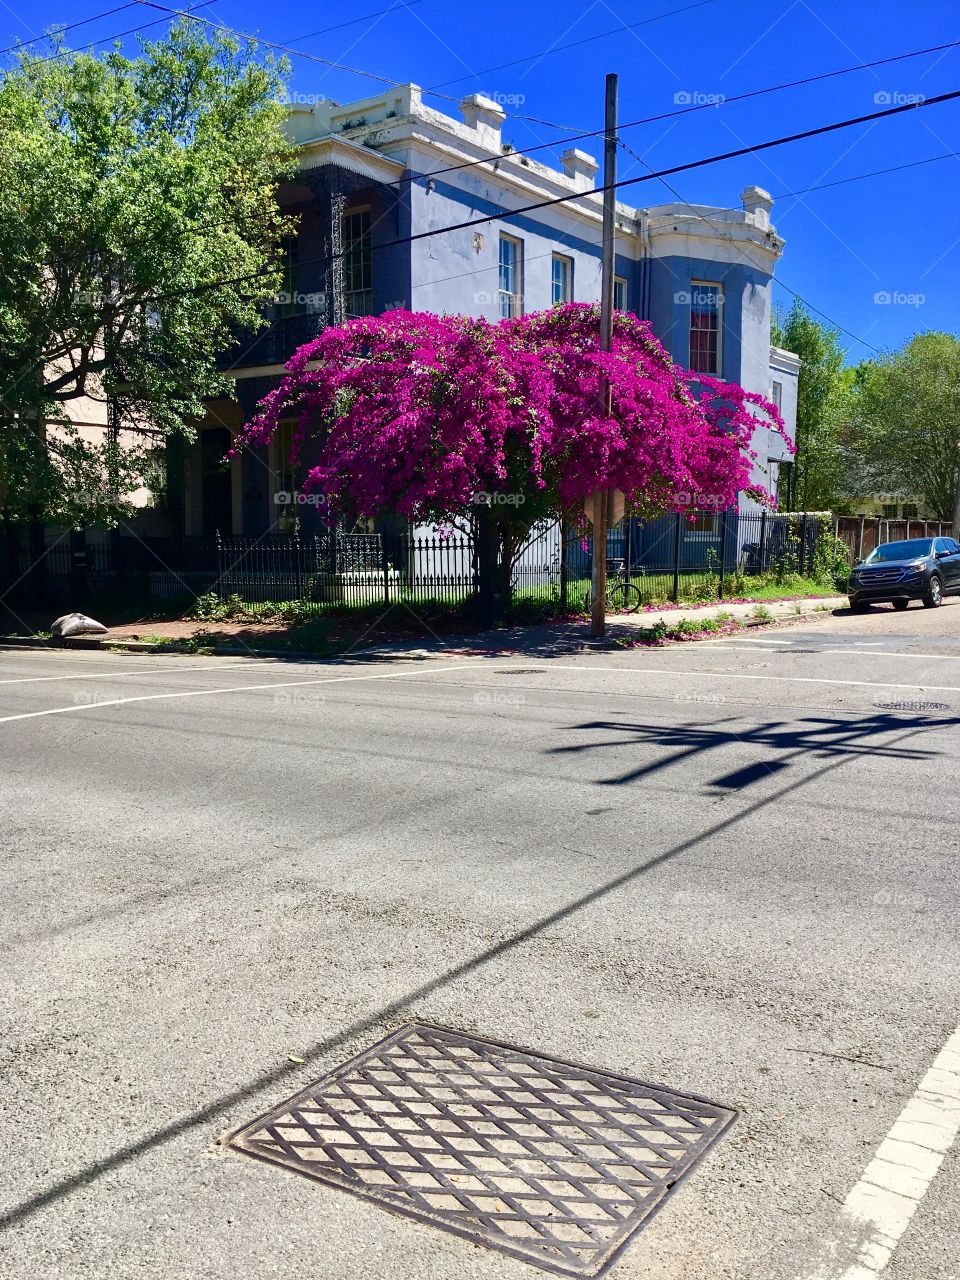 Magazine street bloom, New Orleans 